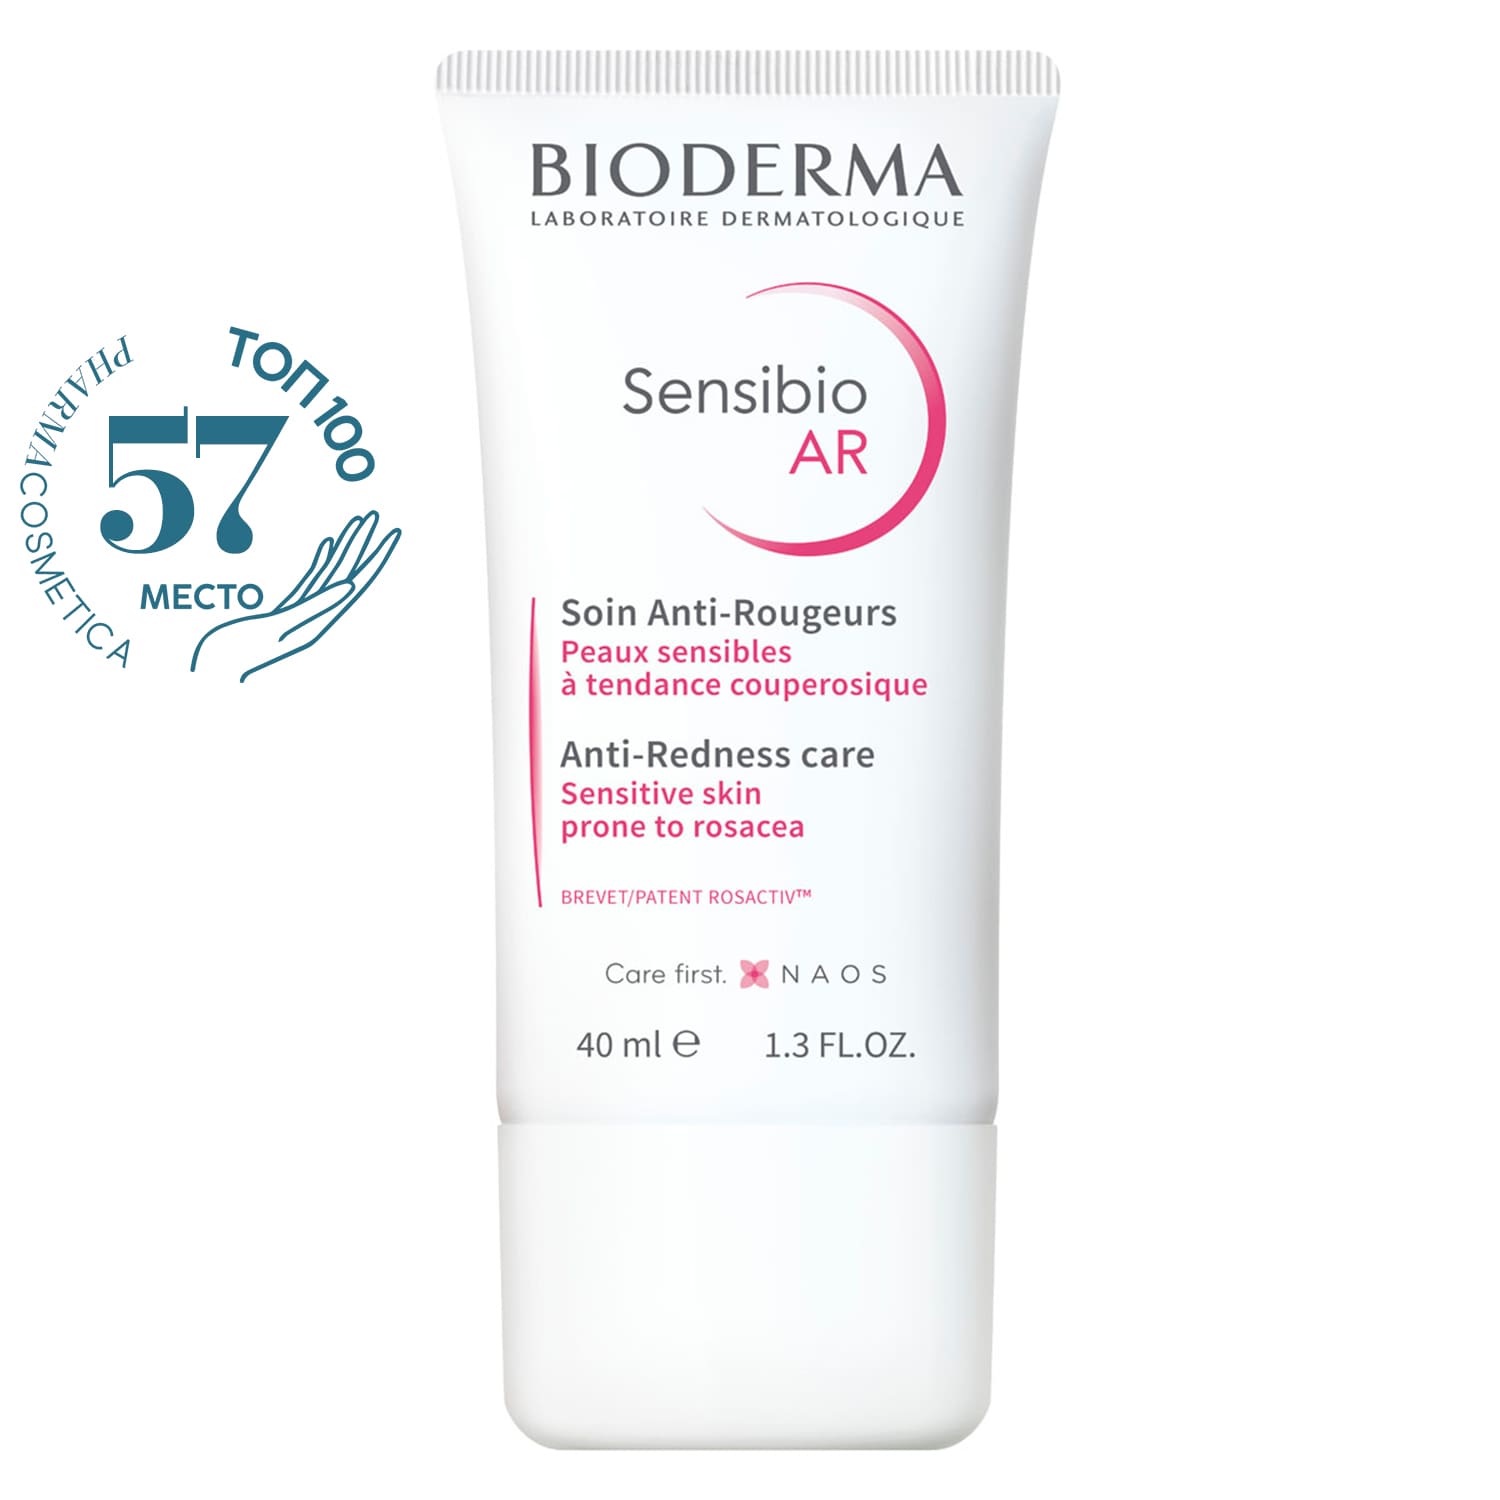 цена Bioderma Увлажняющий крем для кожи с покраснениями и розацеа AR, 40 мл (Bioderma, Sensibio)